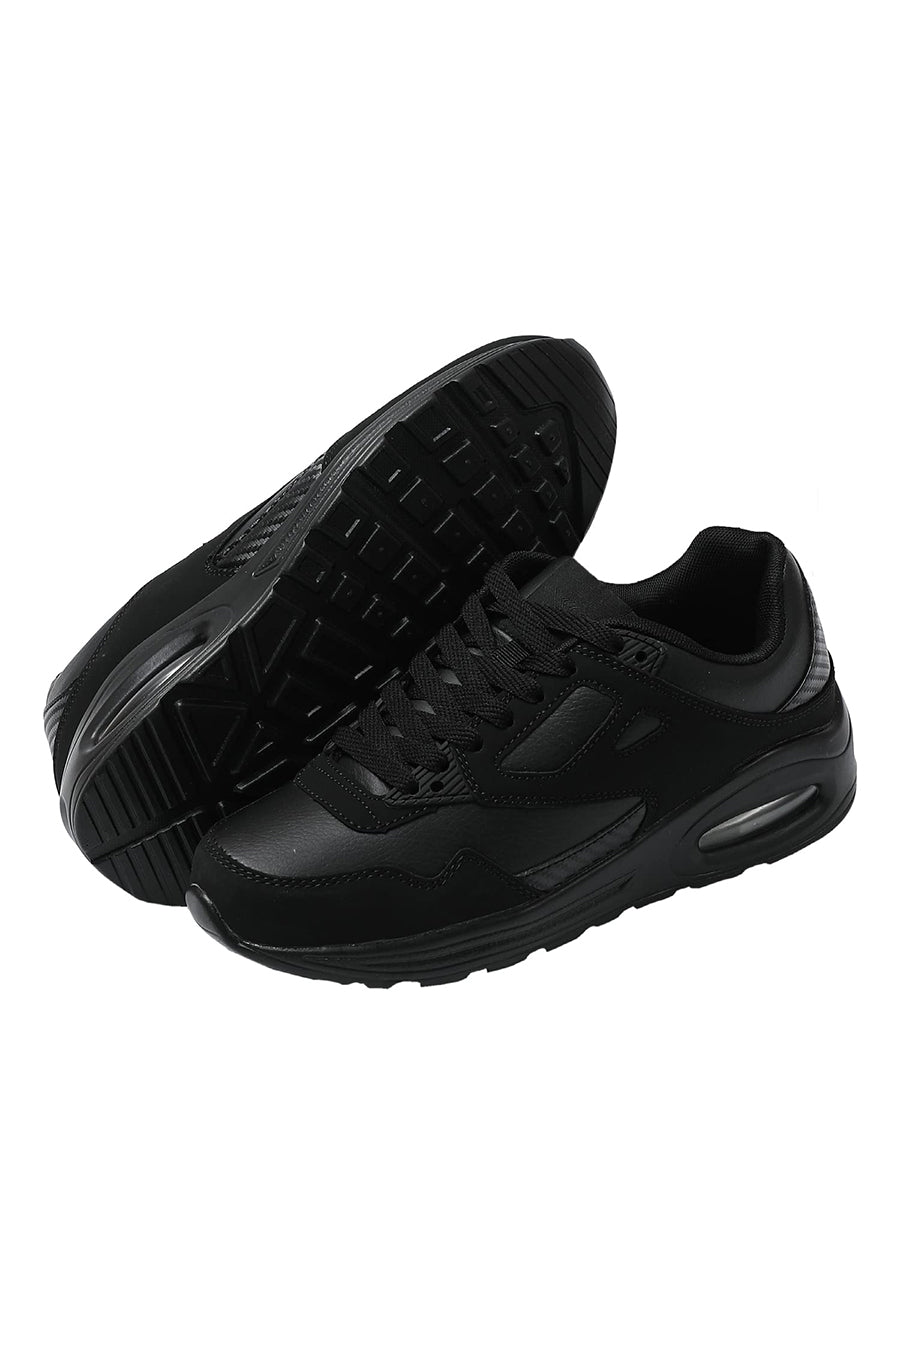 JOMIX Scarpe da Ginnastica Uomo Sneakers Casual Sportive Ammortizzate Comode NU138